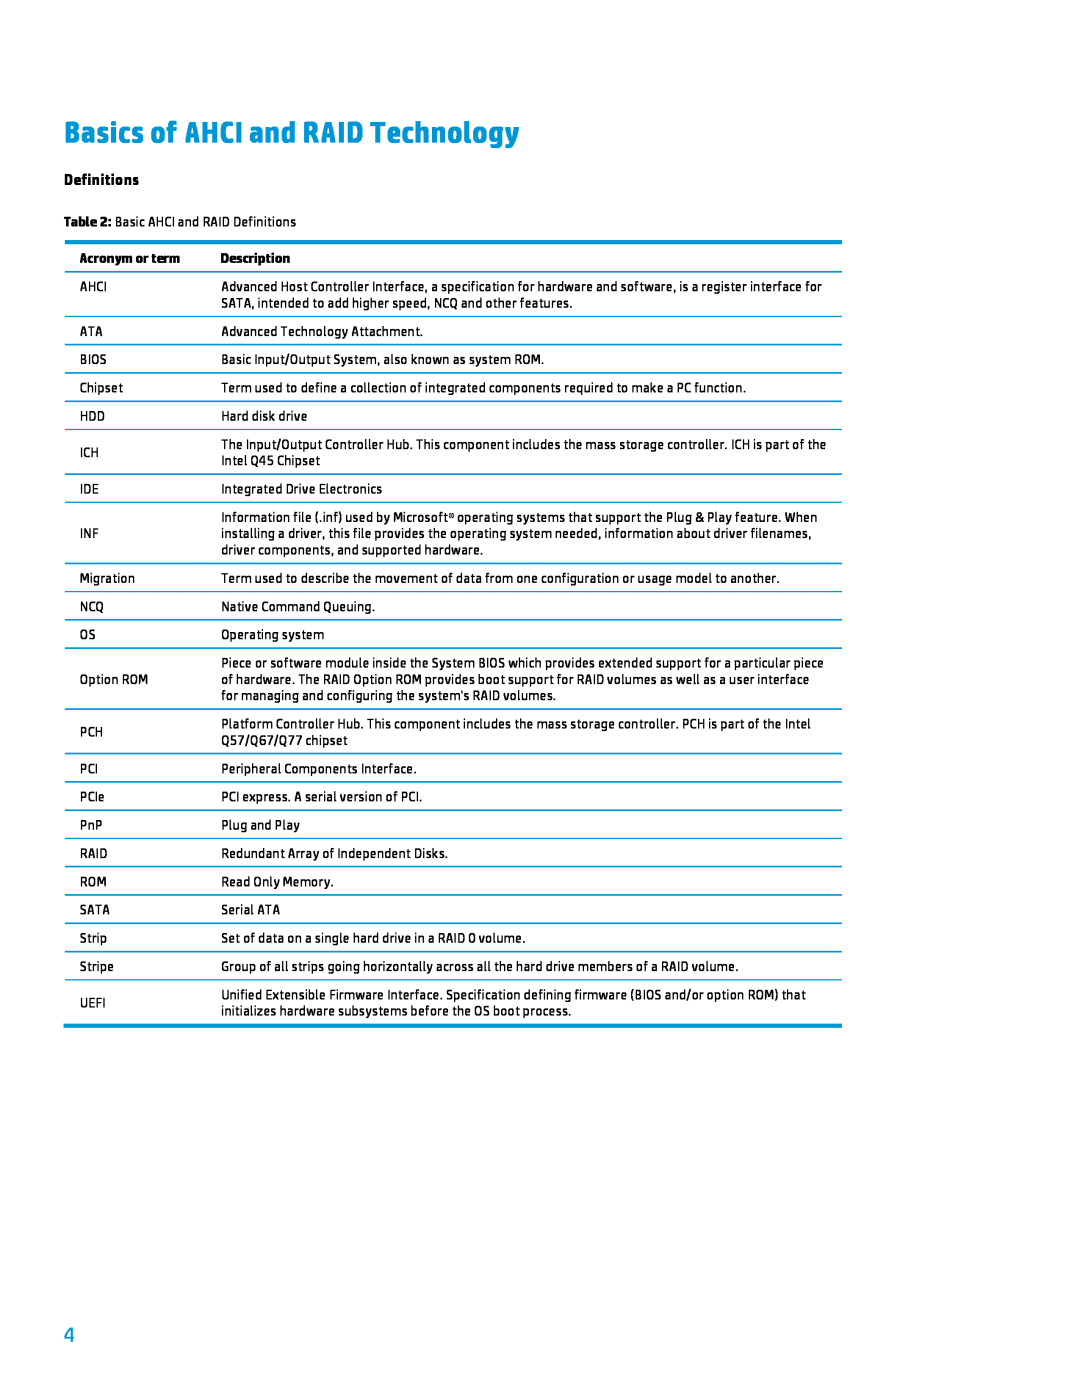 HP 8000 tower manual Basics of AHCI and RAID Technology, Definitions, Acronym or term, Description 